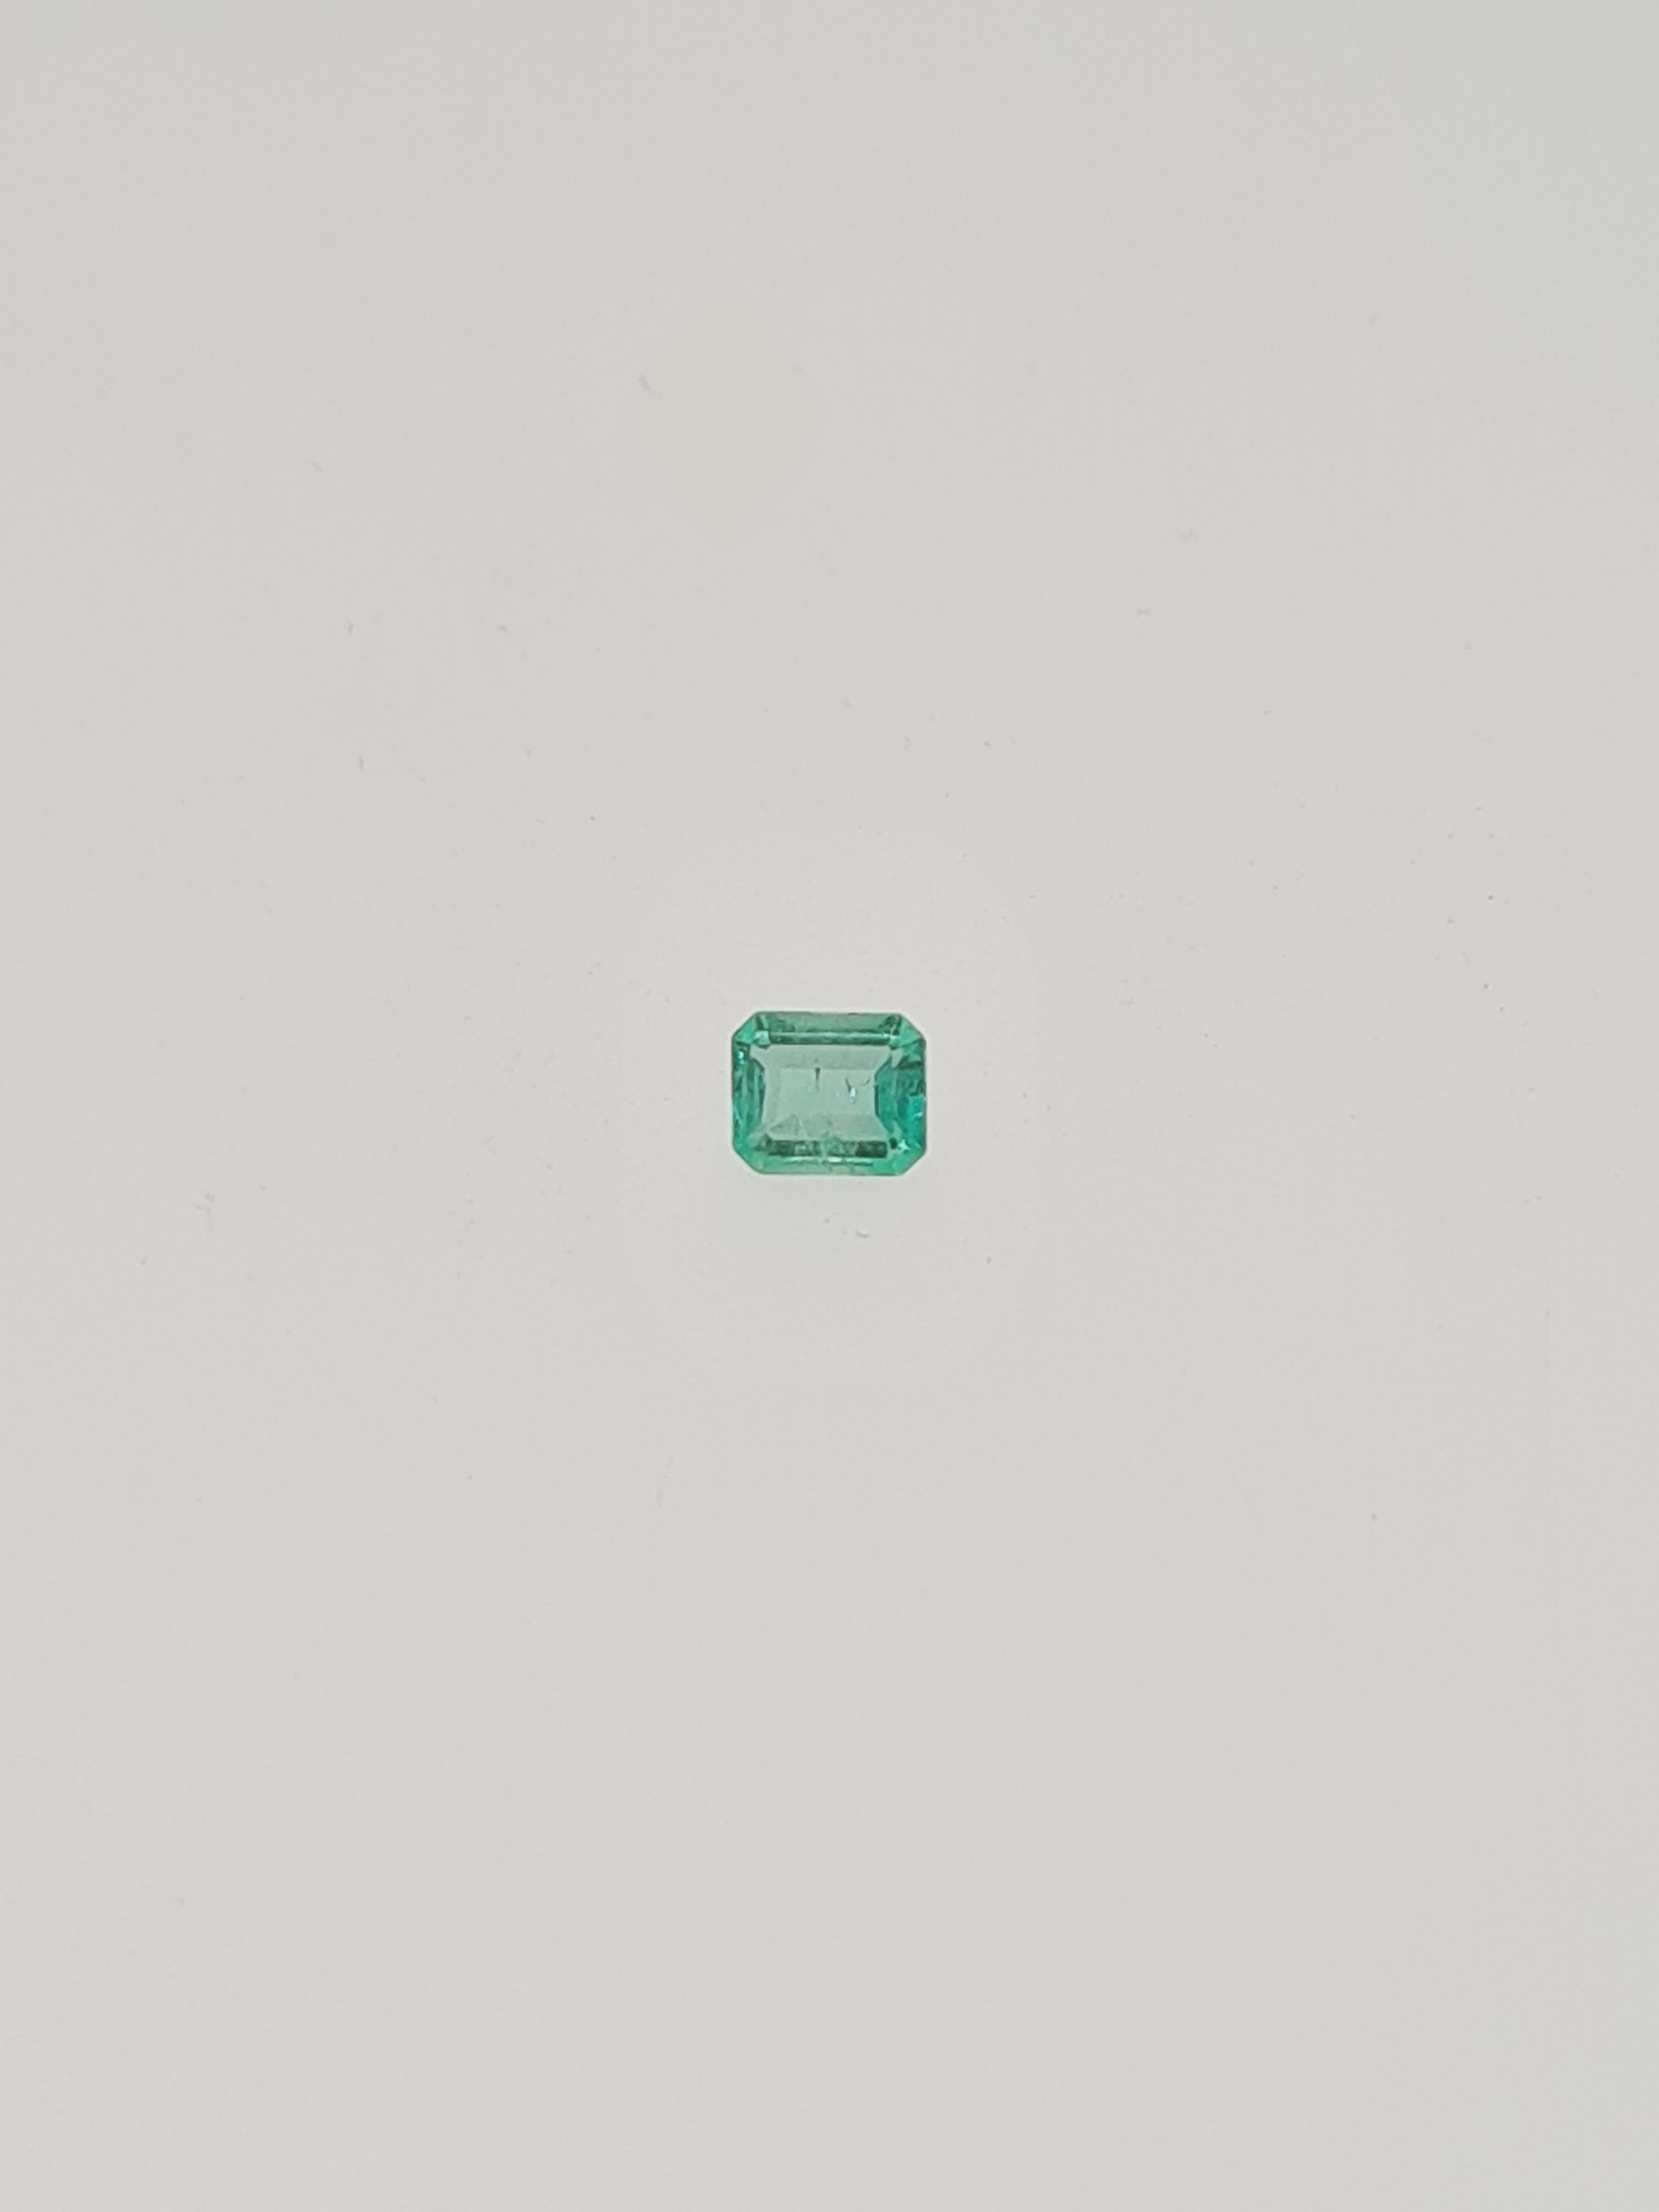 Emerald step-cut gemstone - Image 5 of 5